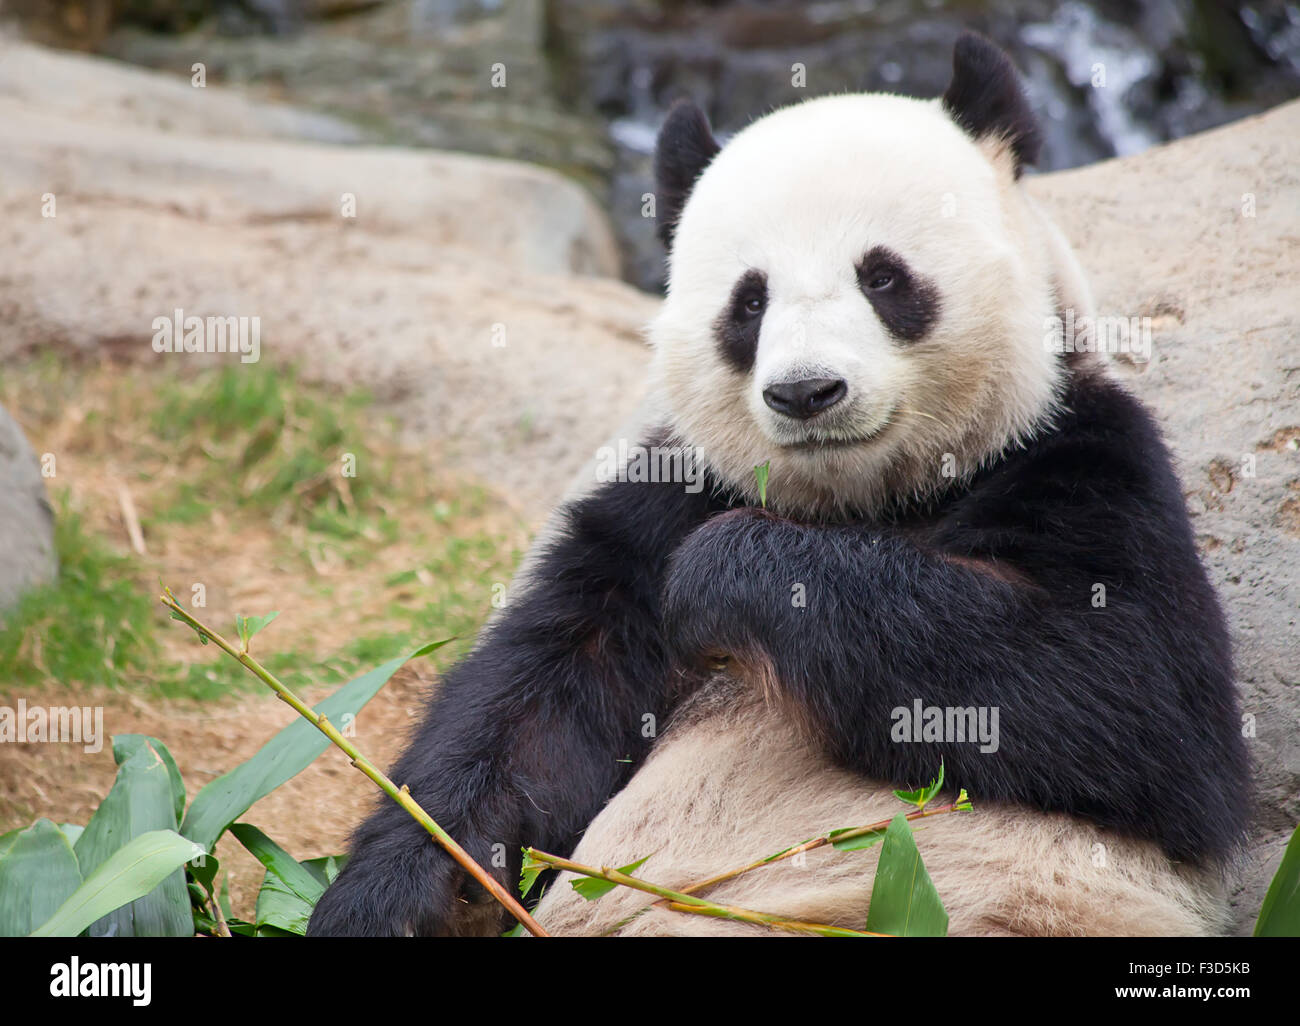 Giant panda bear eating bamboo leafs Stock Photo